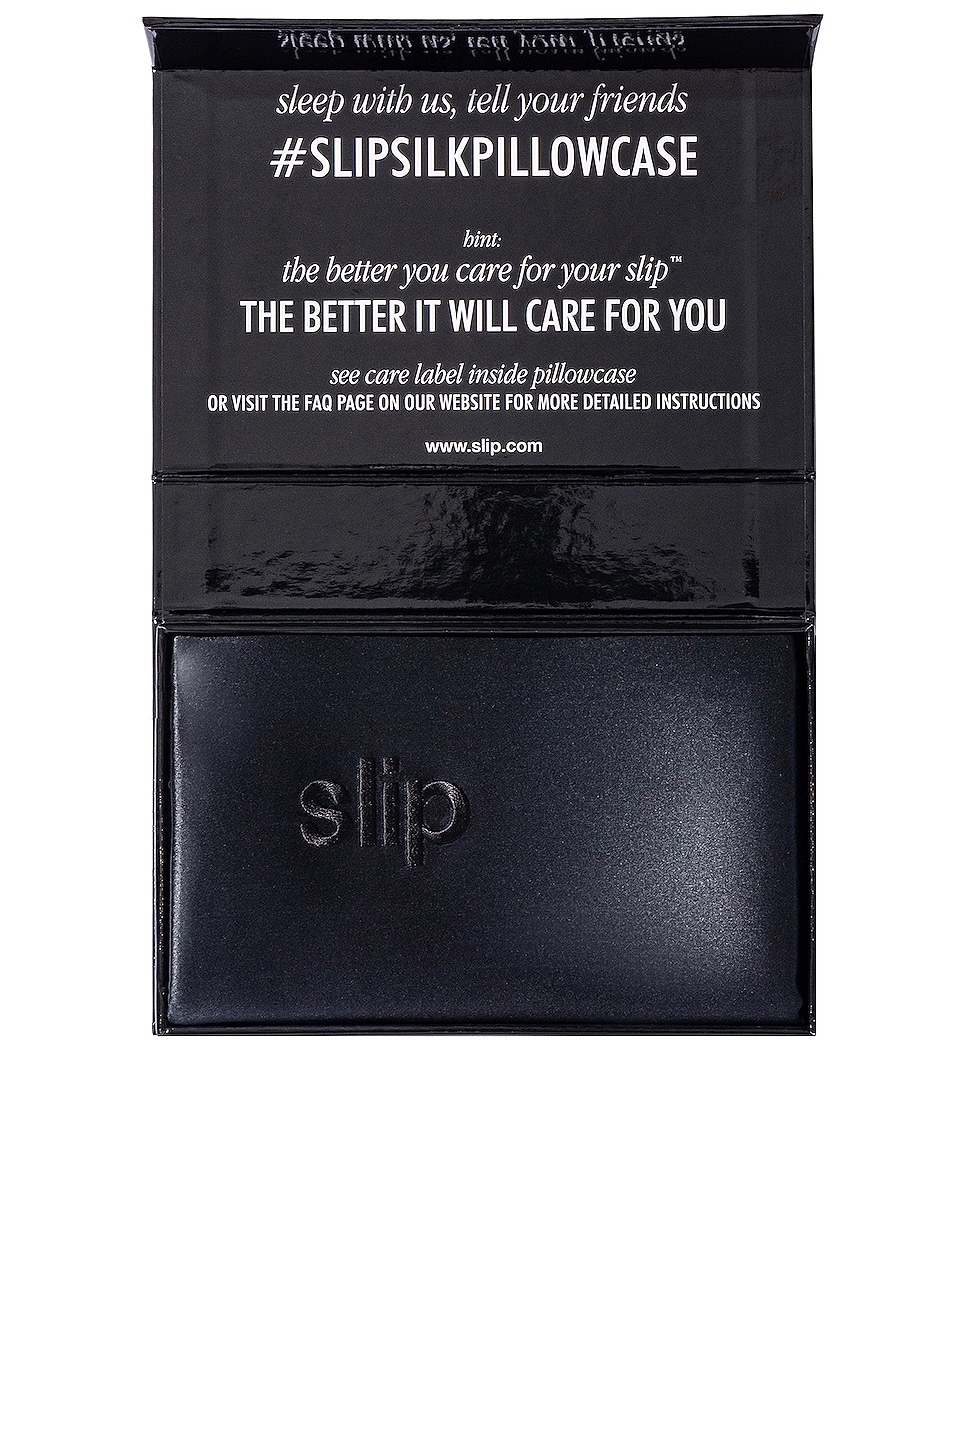 Shop Slip Queen/standard Pure Silk Pillowcase In Black